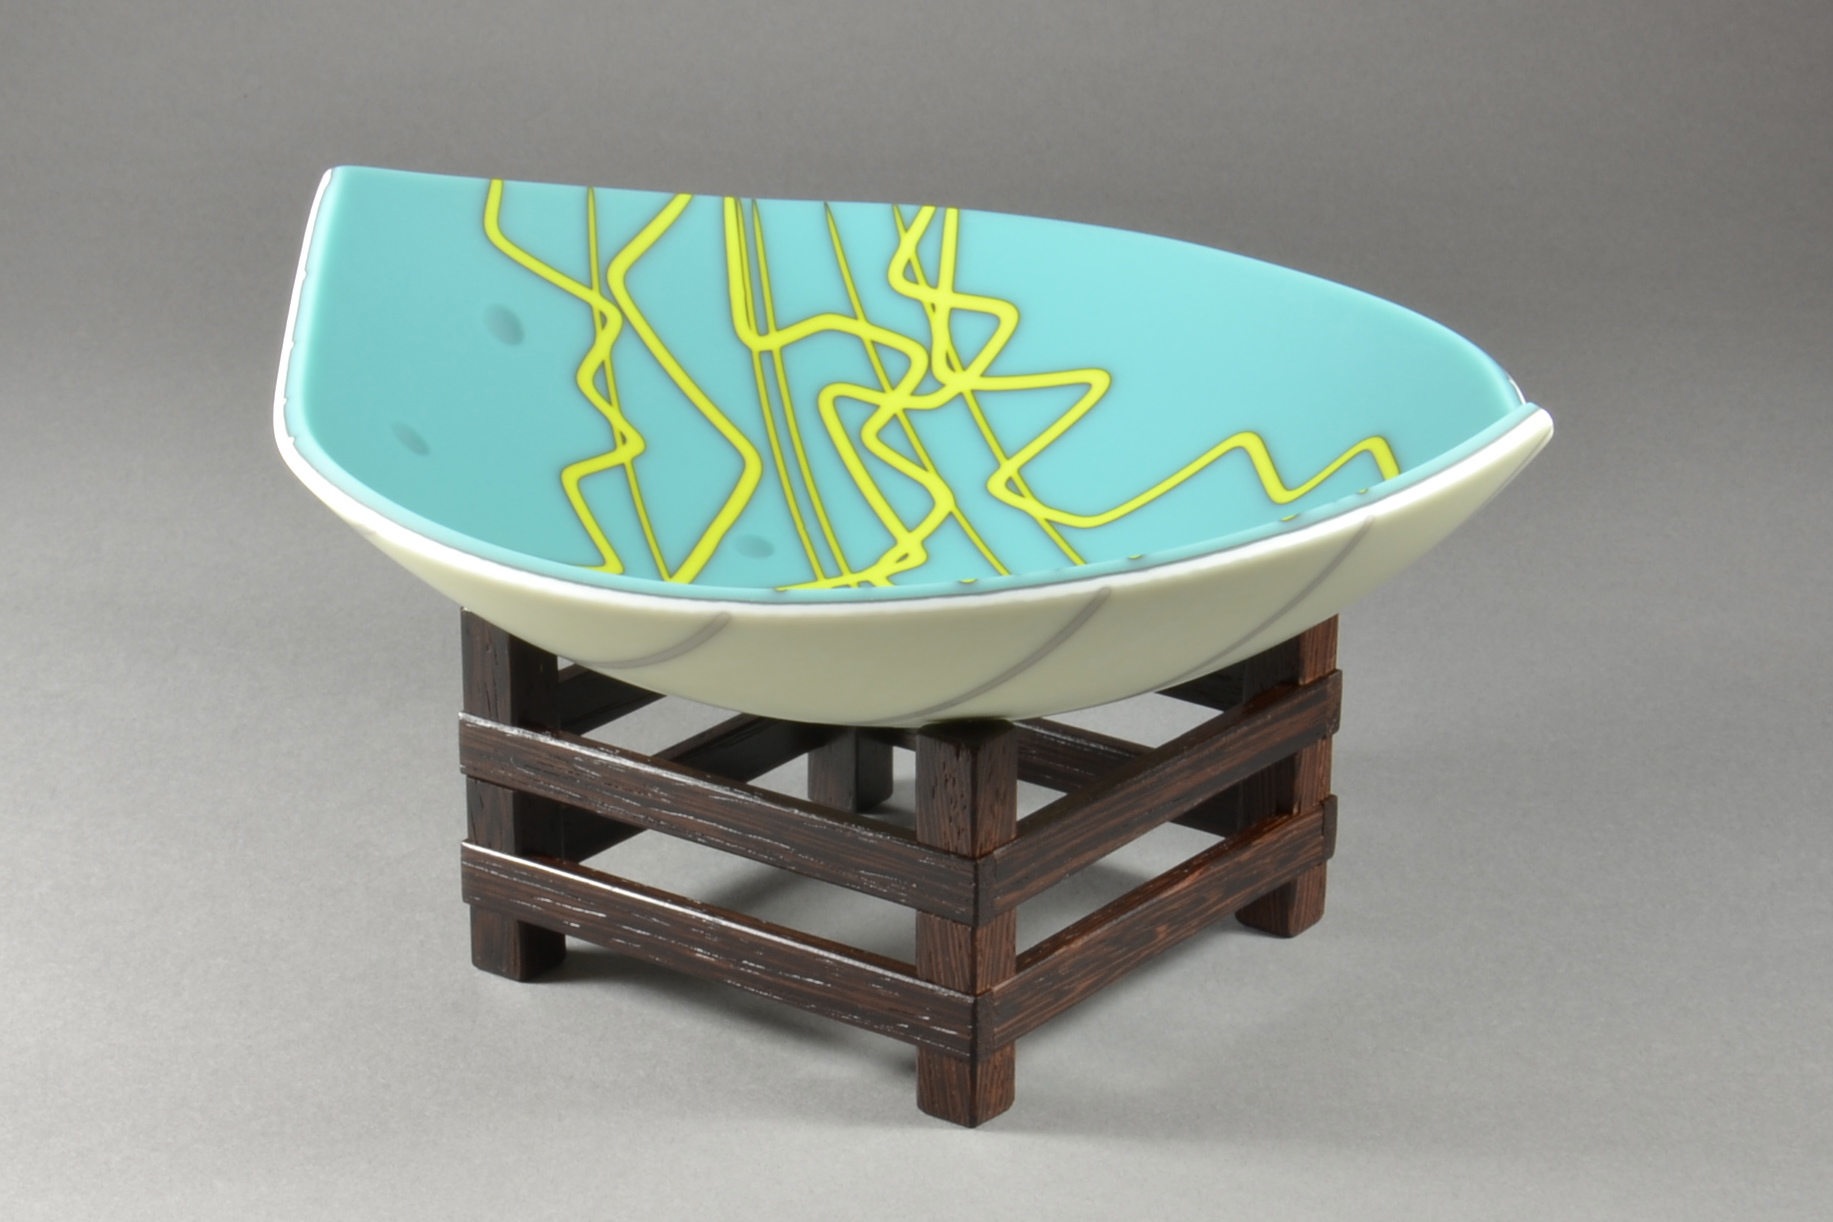 Fused Glass Art Vessel by Darryl Berry